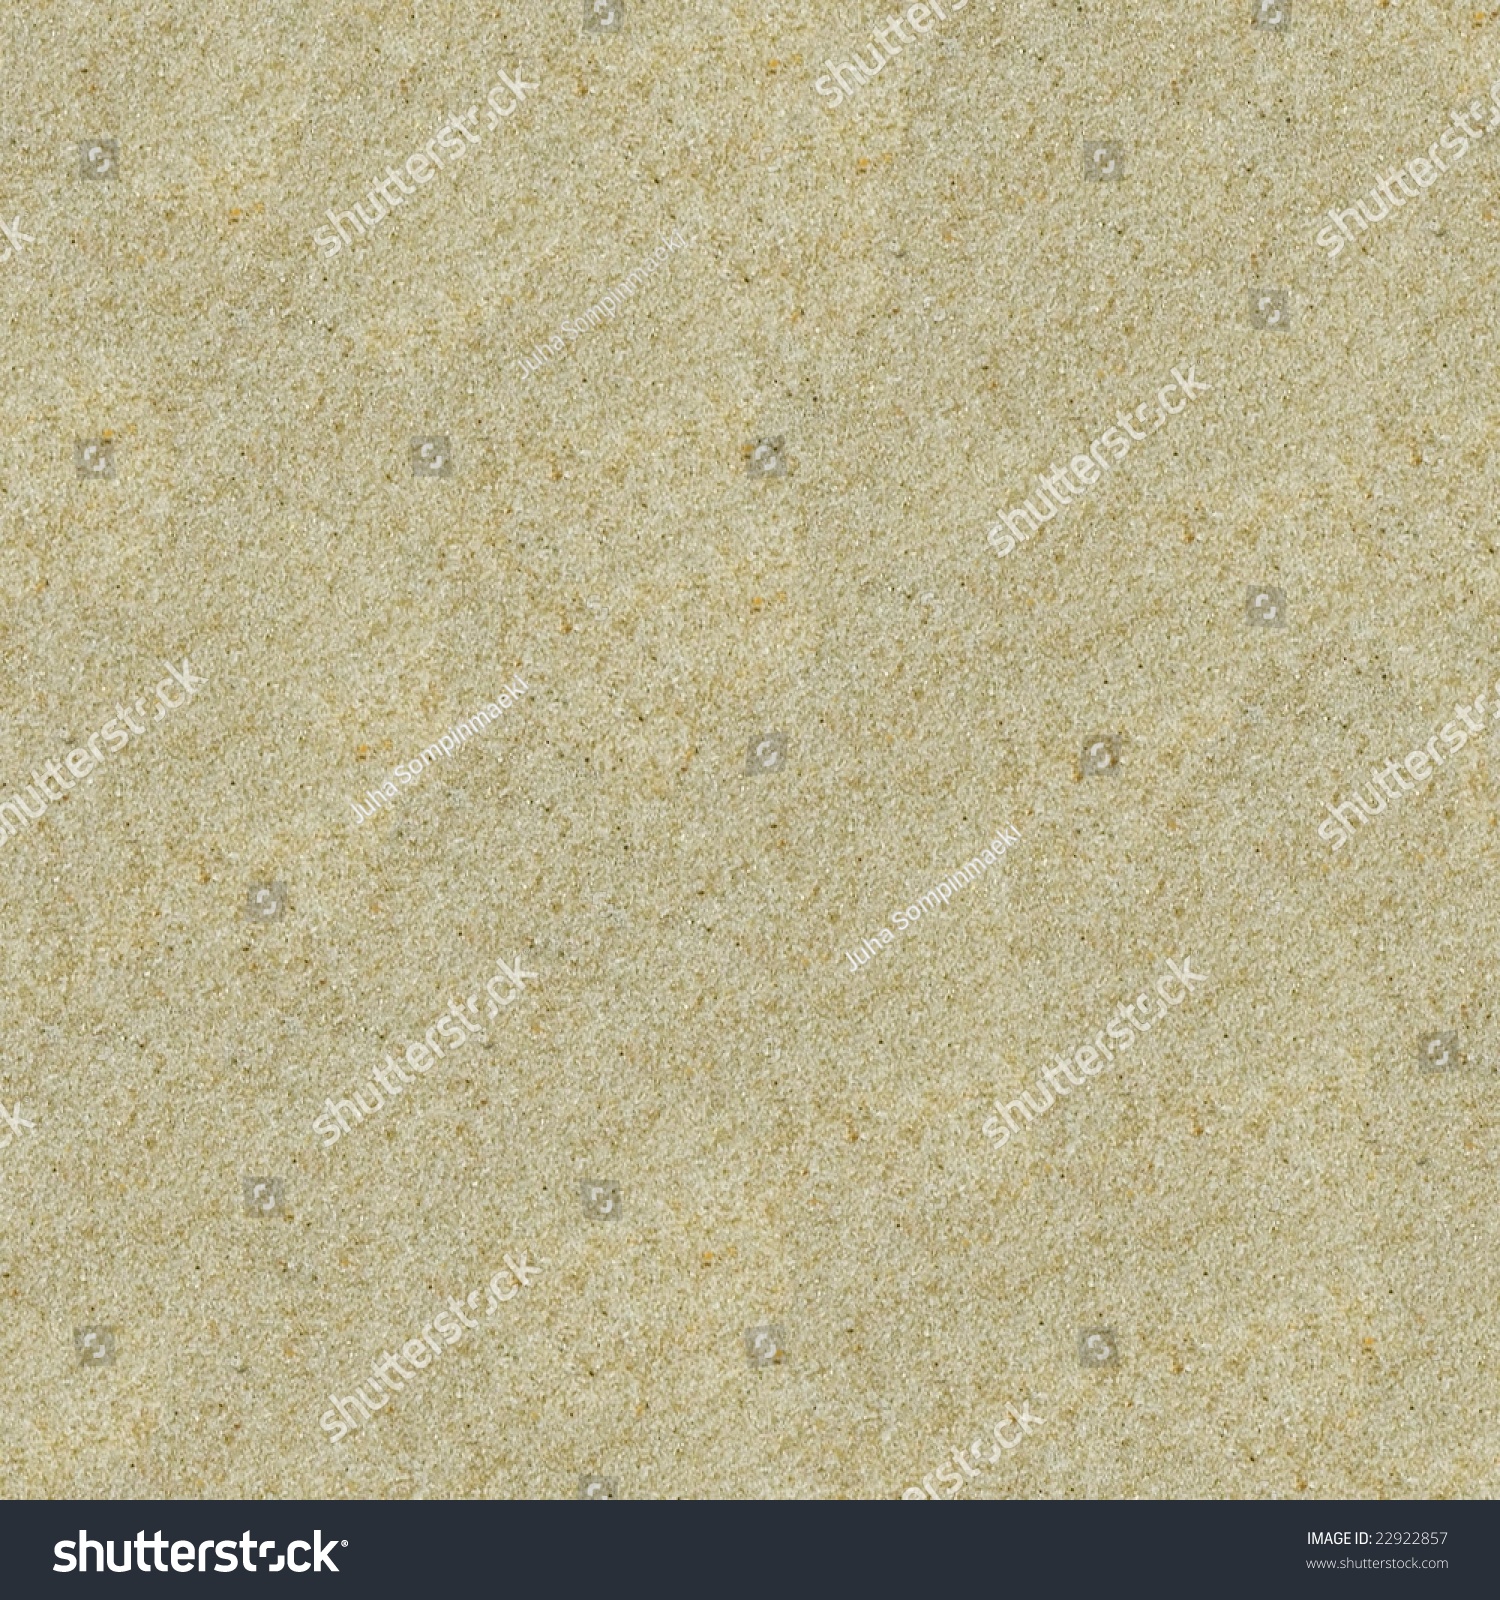 Beach Sand Texture Seamless Stock Photo 22922857 - Shutterstock